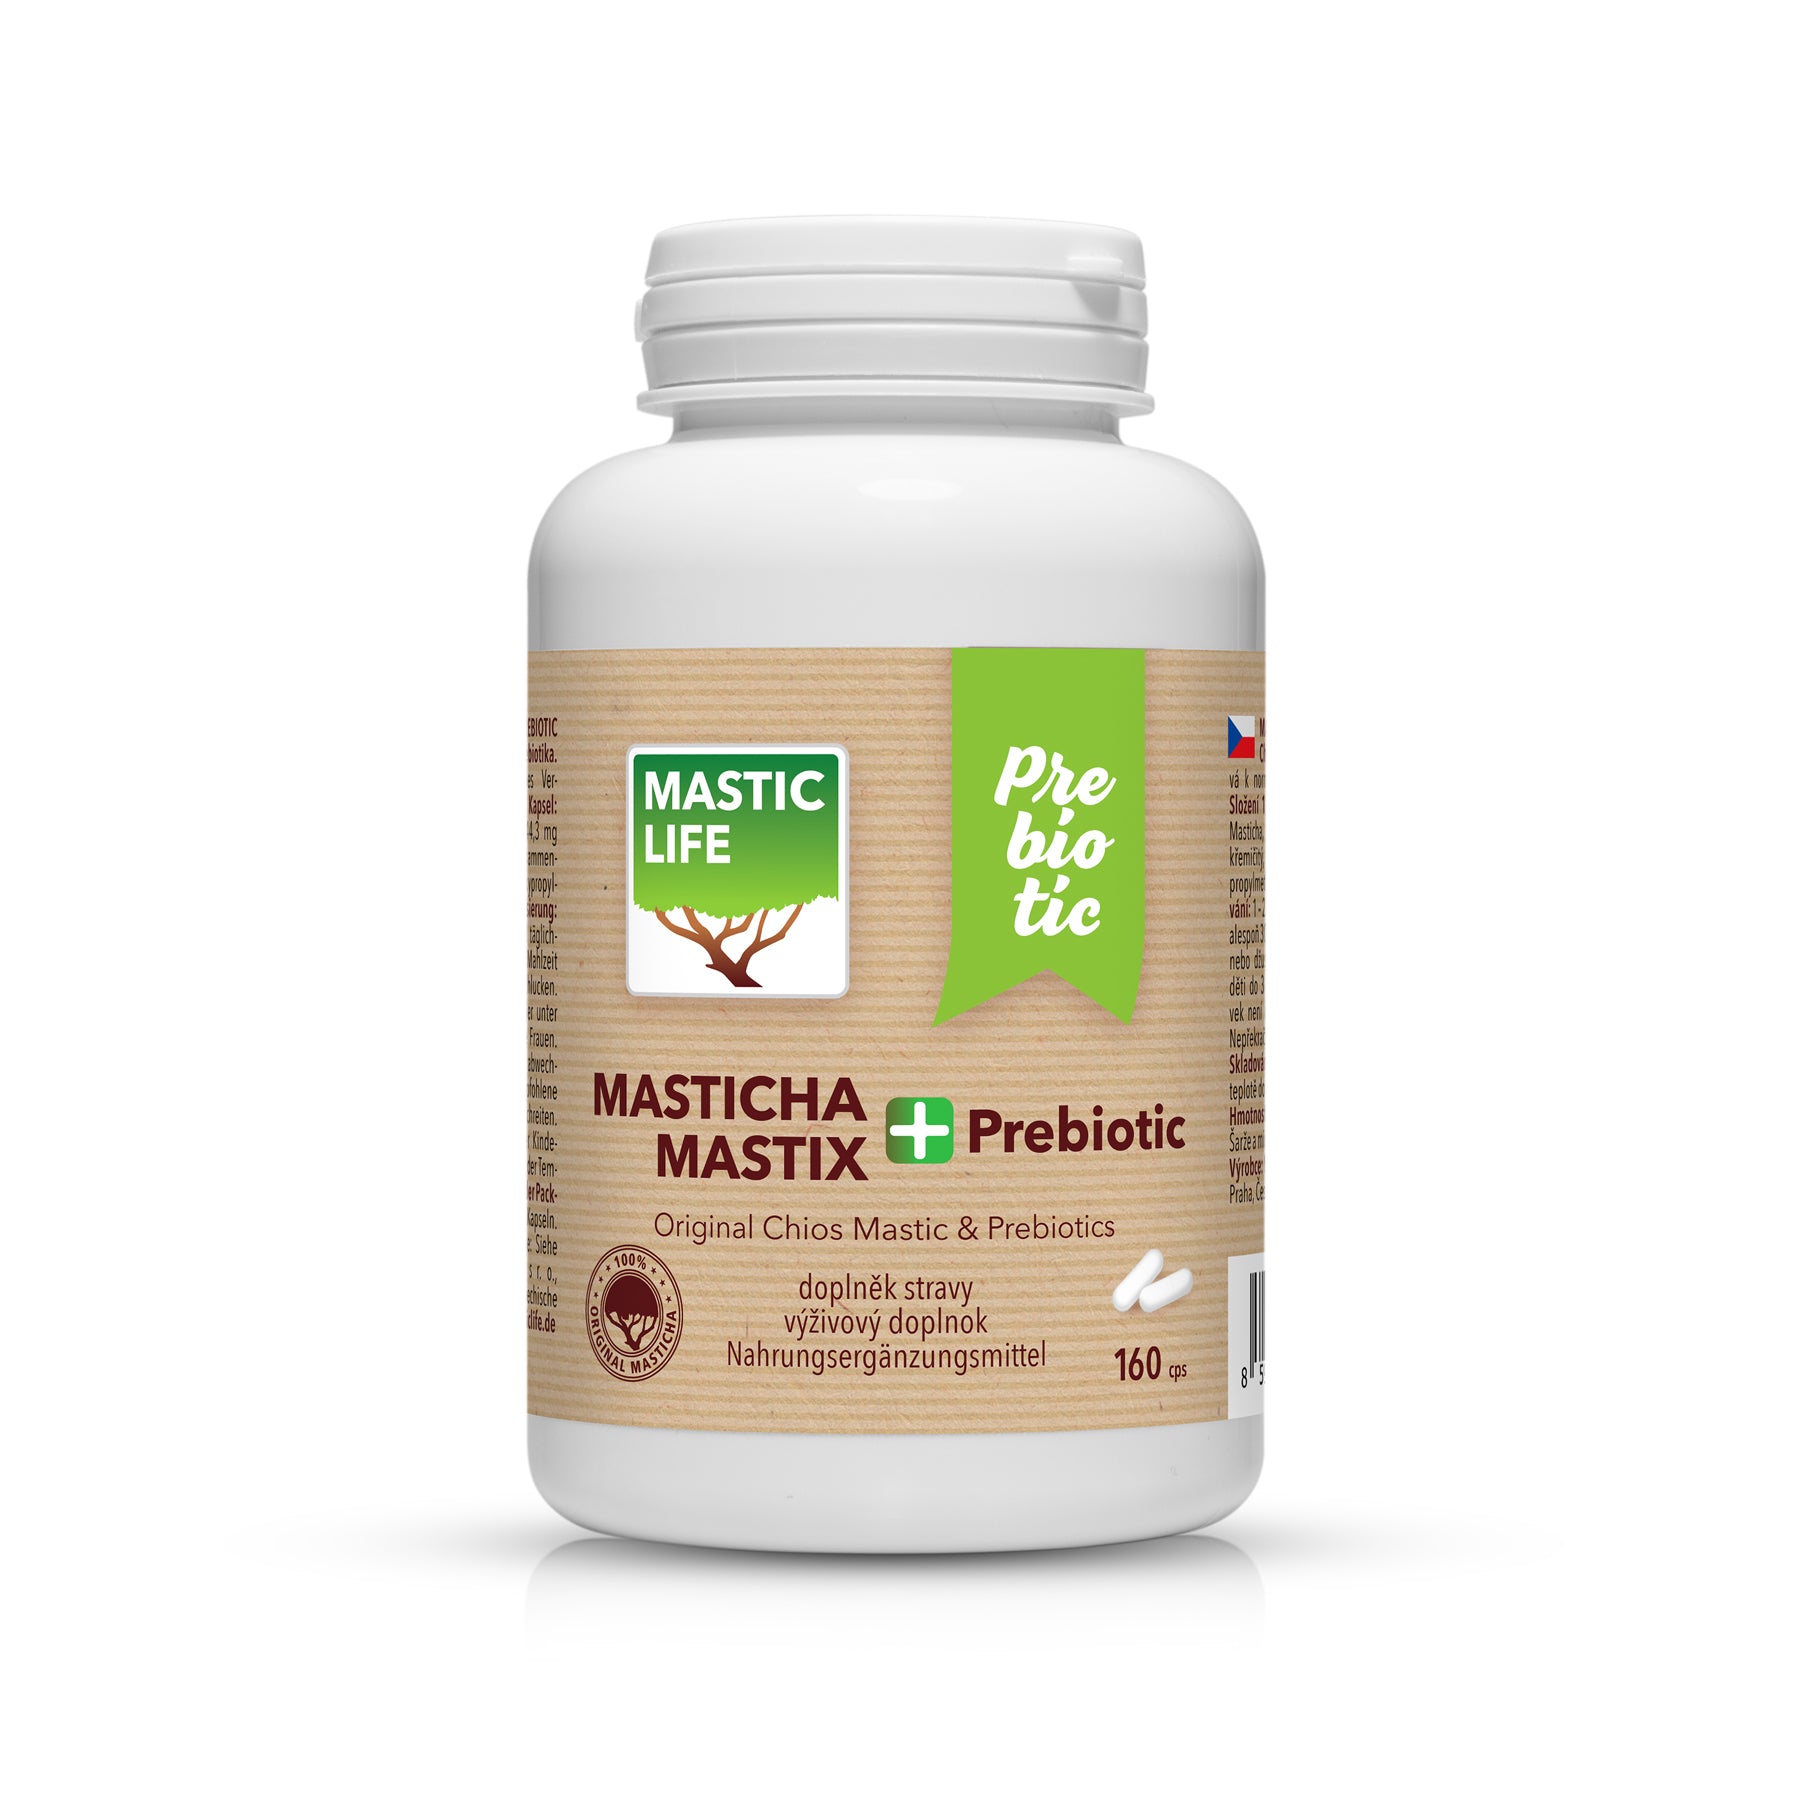 Mastix+ Prebiotic (160 Kapseln) Masticlife